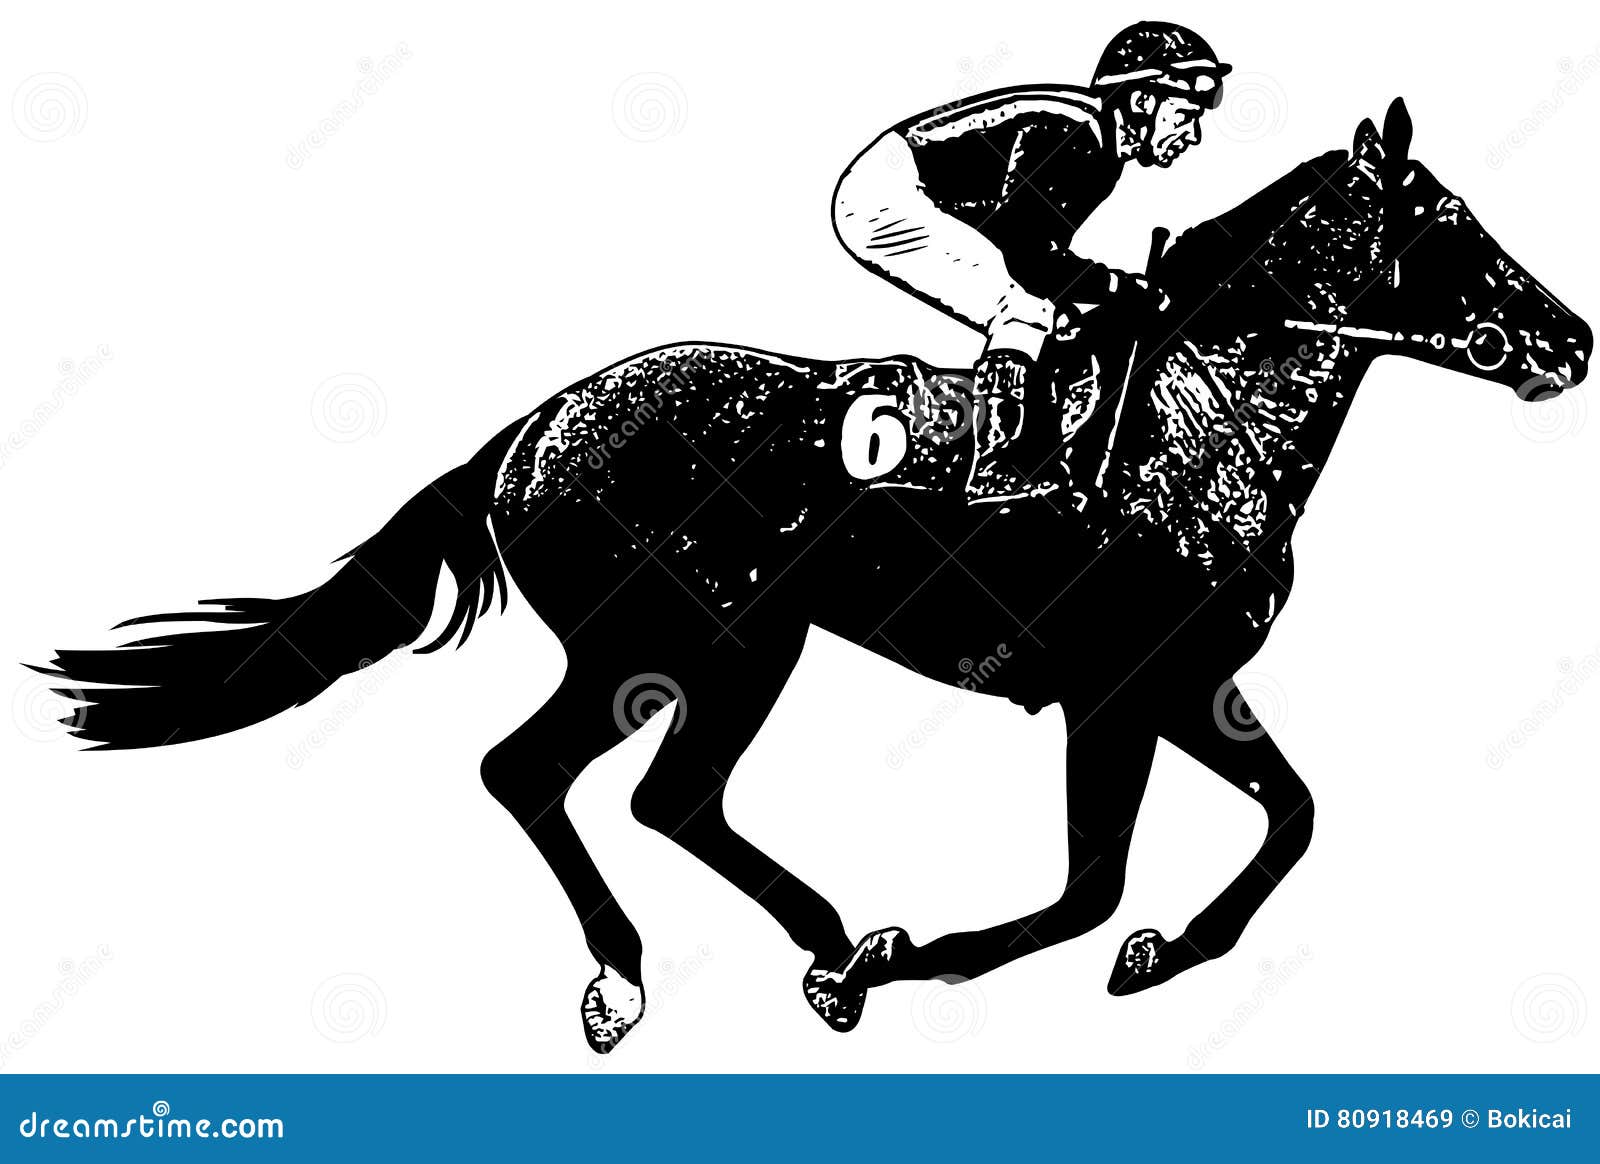 Horse Sketch Royalty-Free Stock Image | CartoonDealer.com #56621194